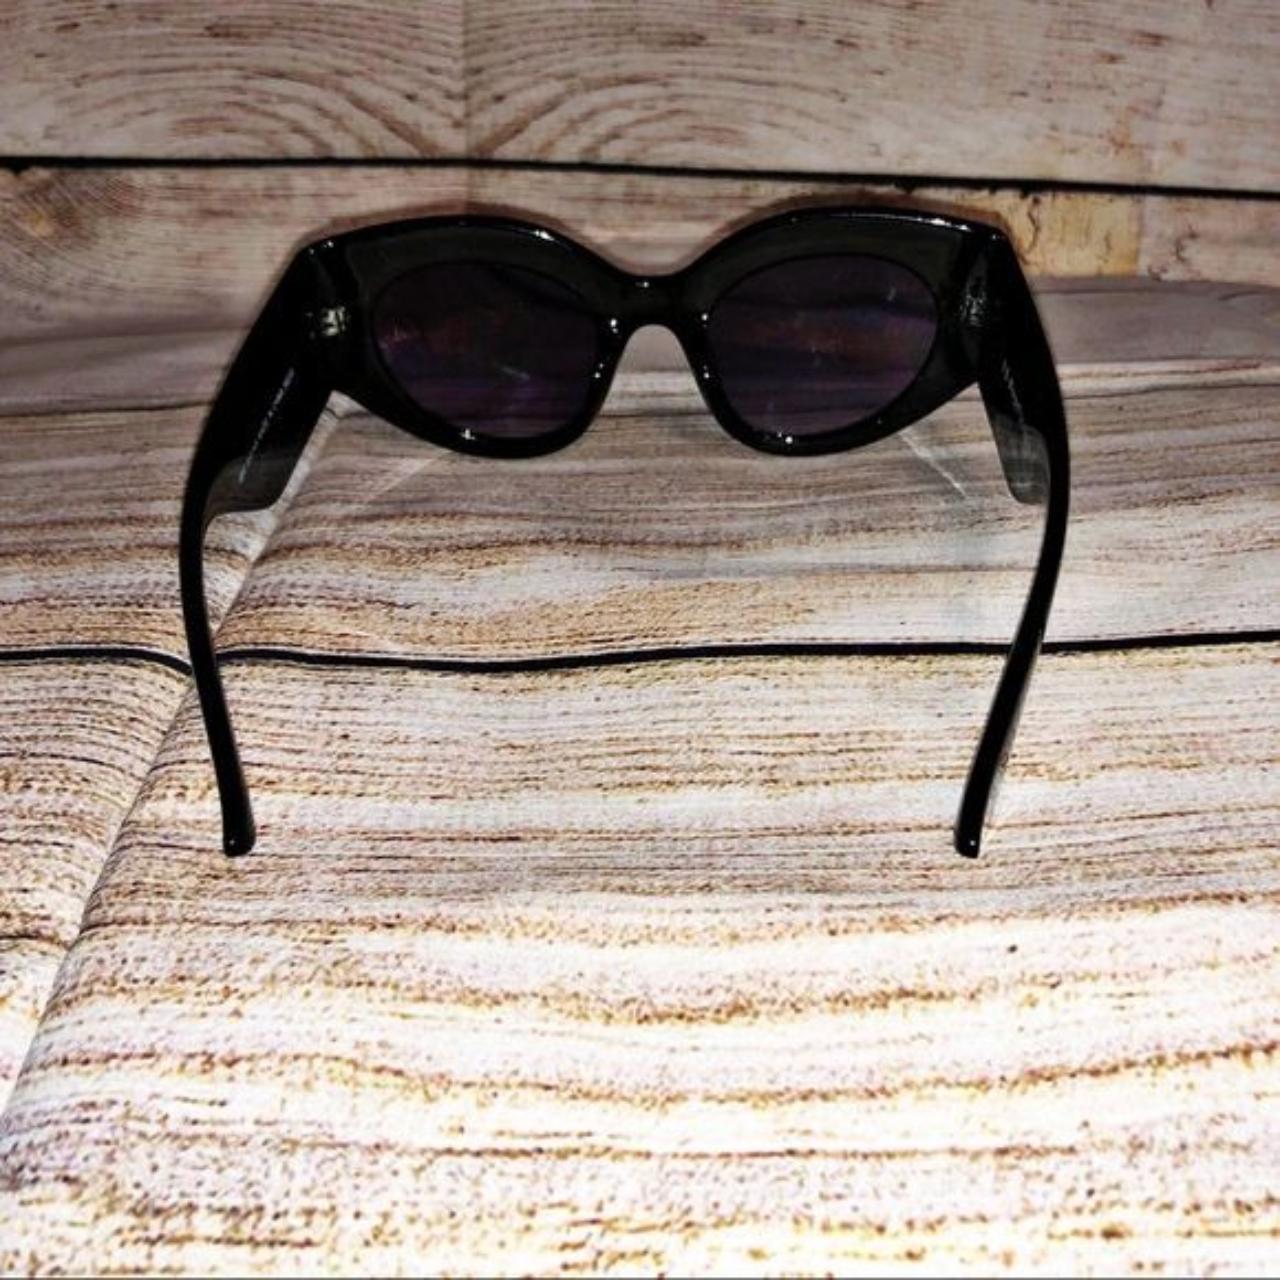 Product Image 3 - A.J. Morgan Black Flattery Sunglasses.
Black